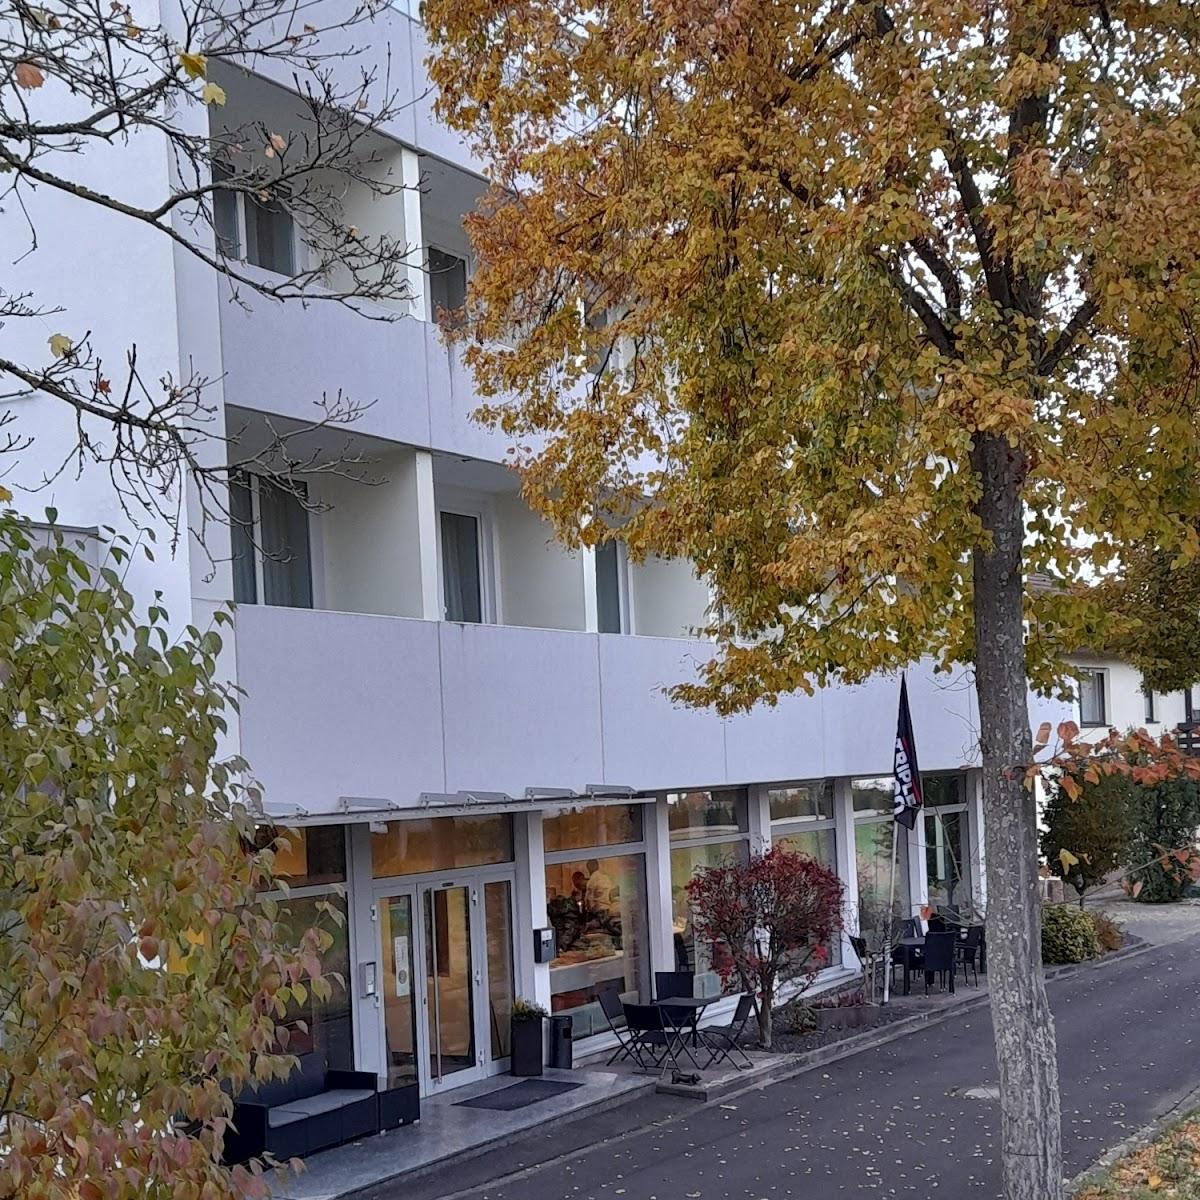 Restaurant "Hotel Schober am Kurpark" in Bad Salzschlirf